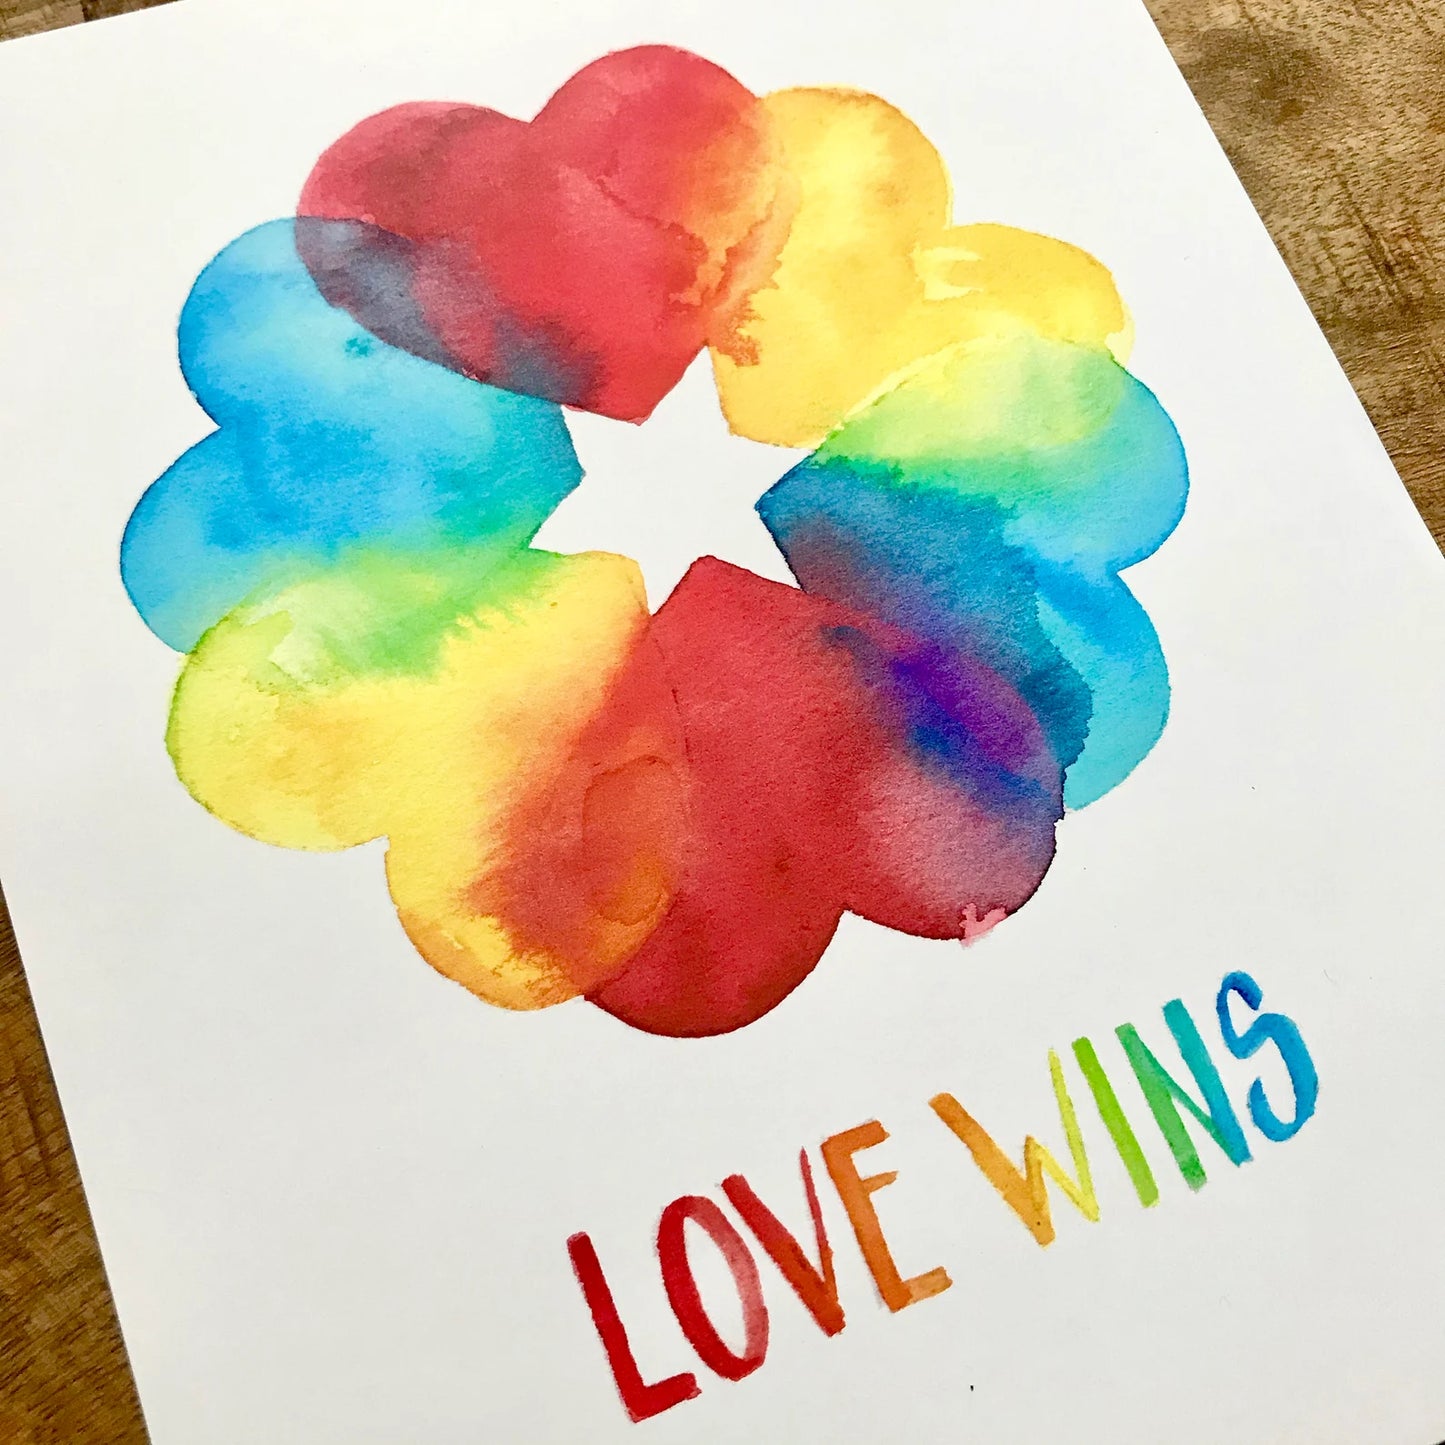 Love Wins Print